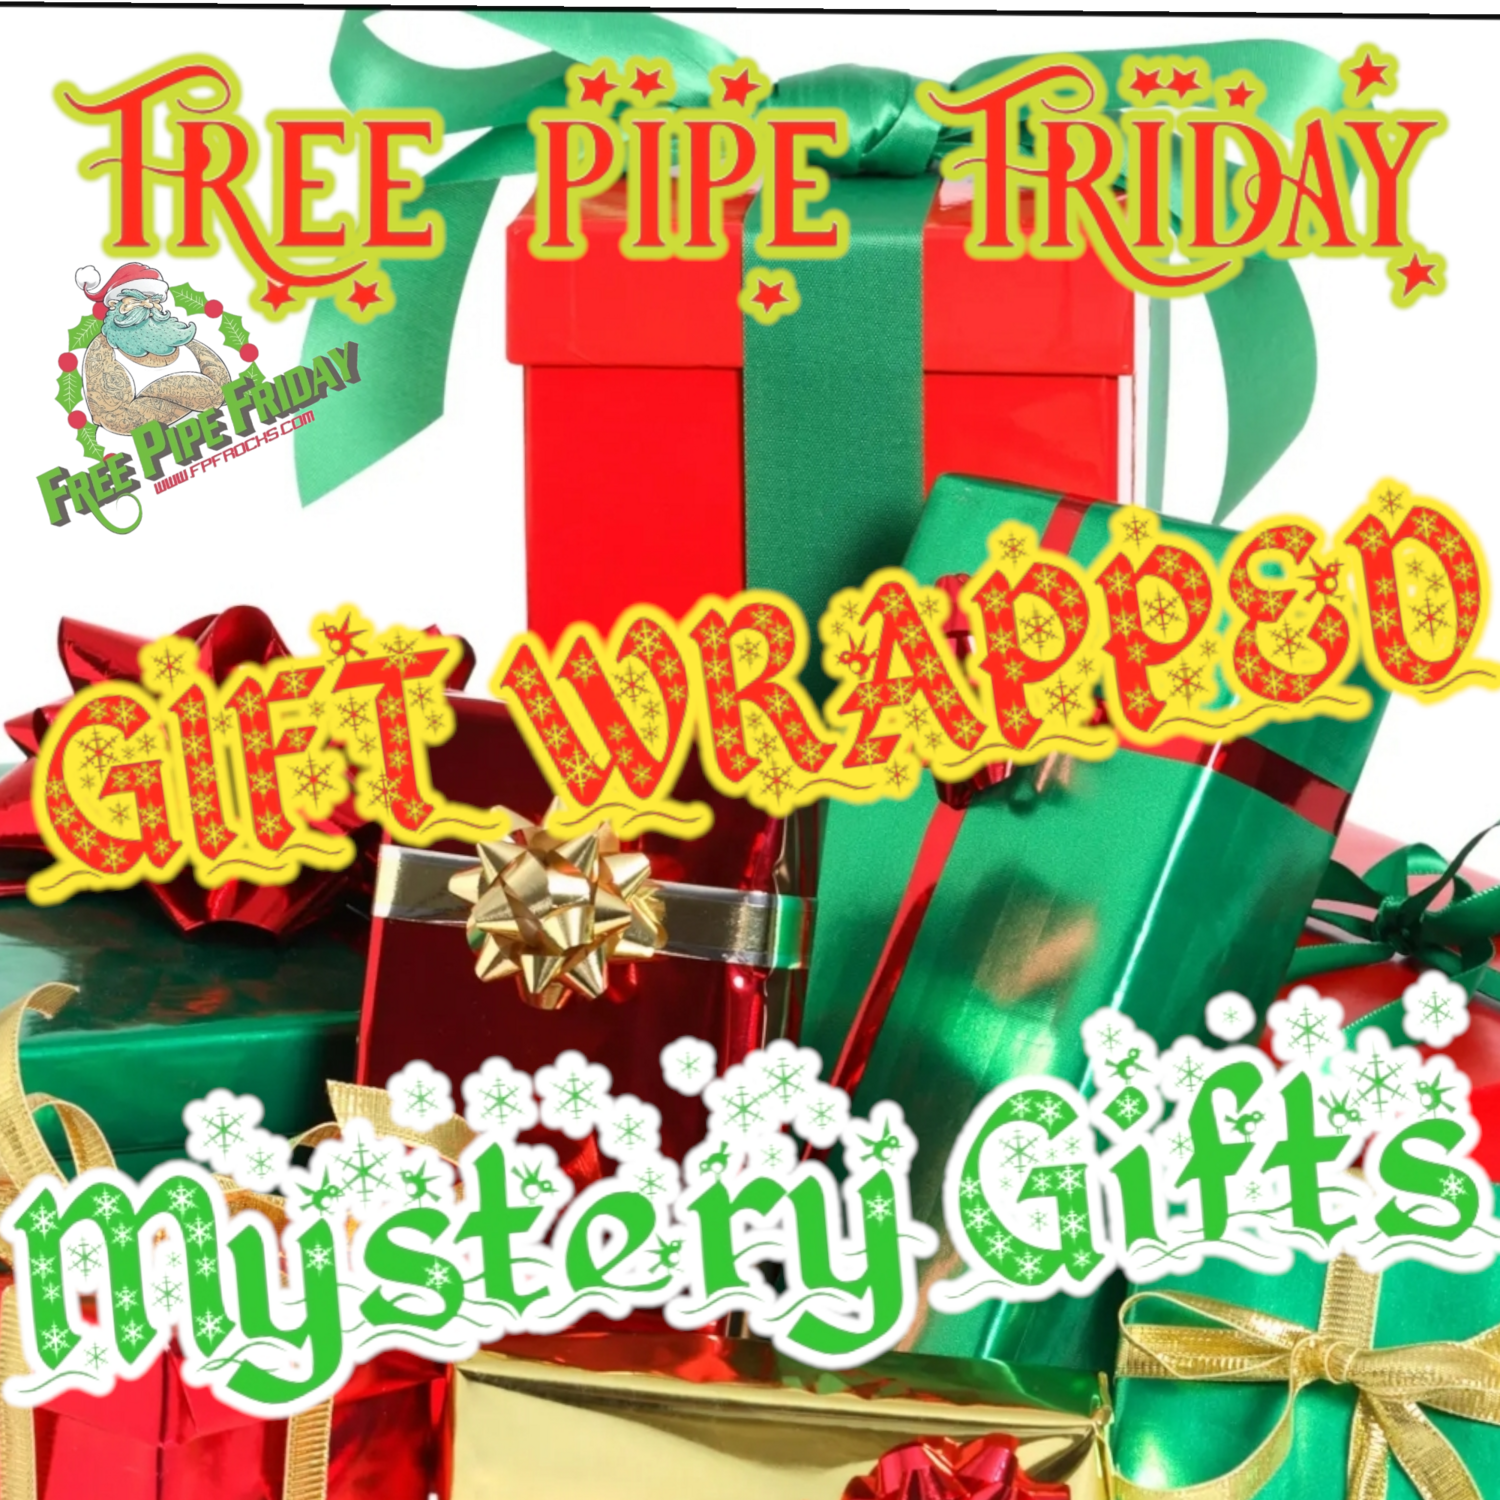 Gift wraped mystery box